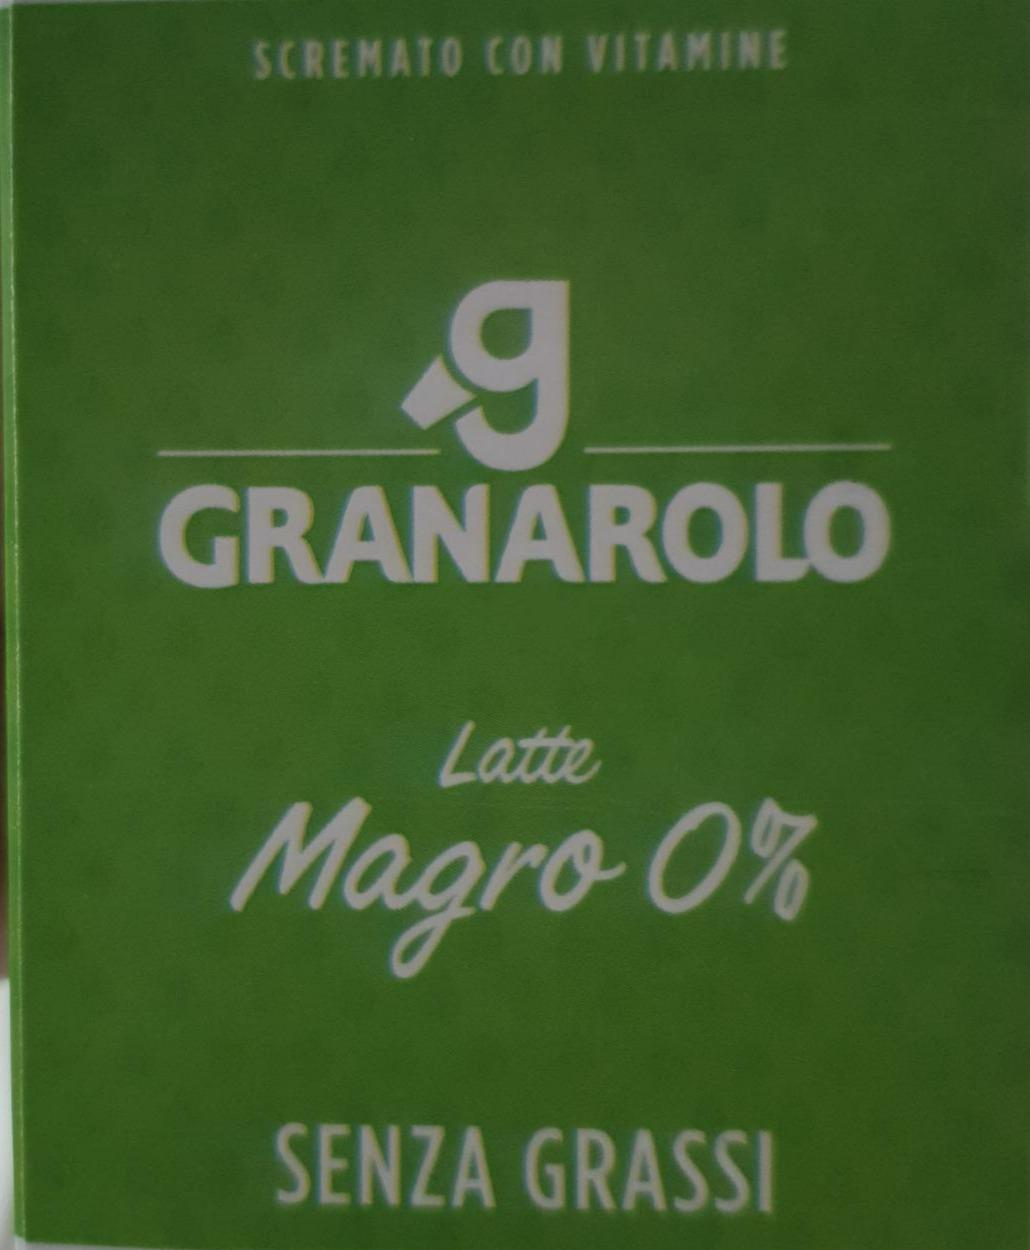 Fotografie - Latte Magro 0% Granarolo